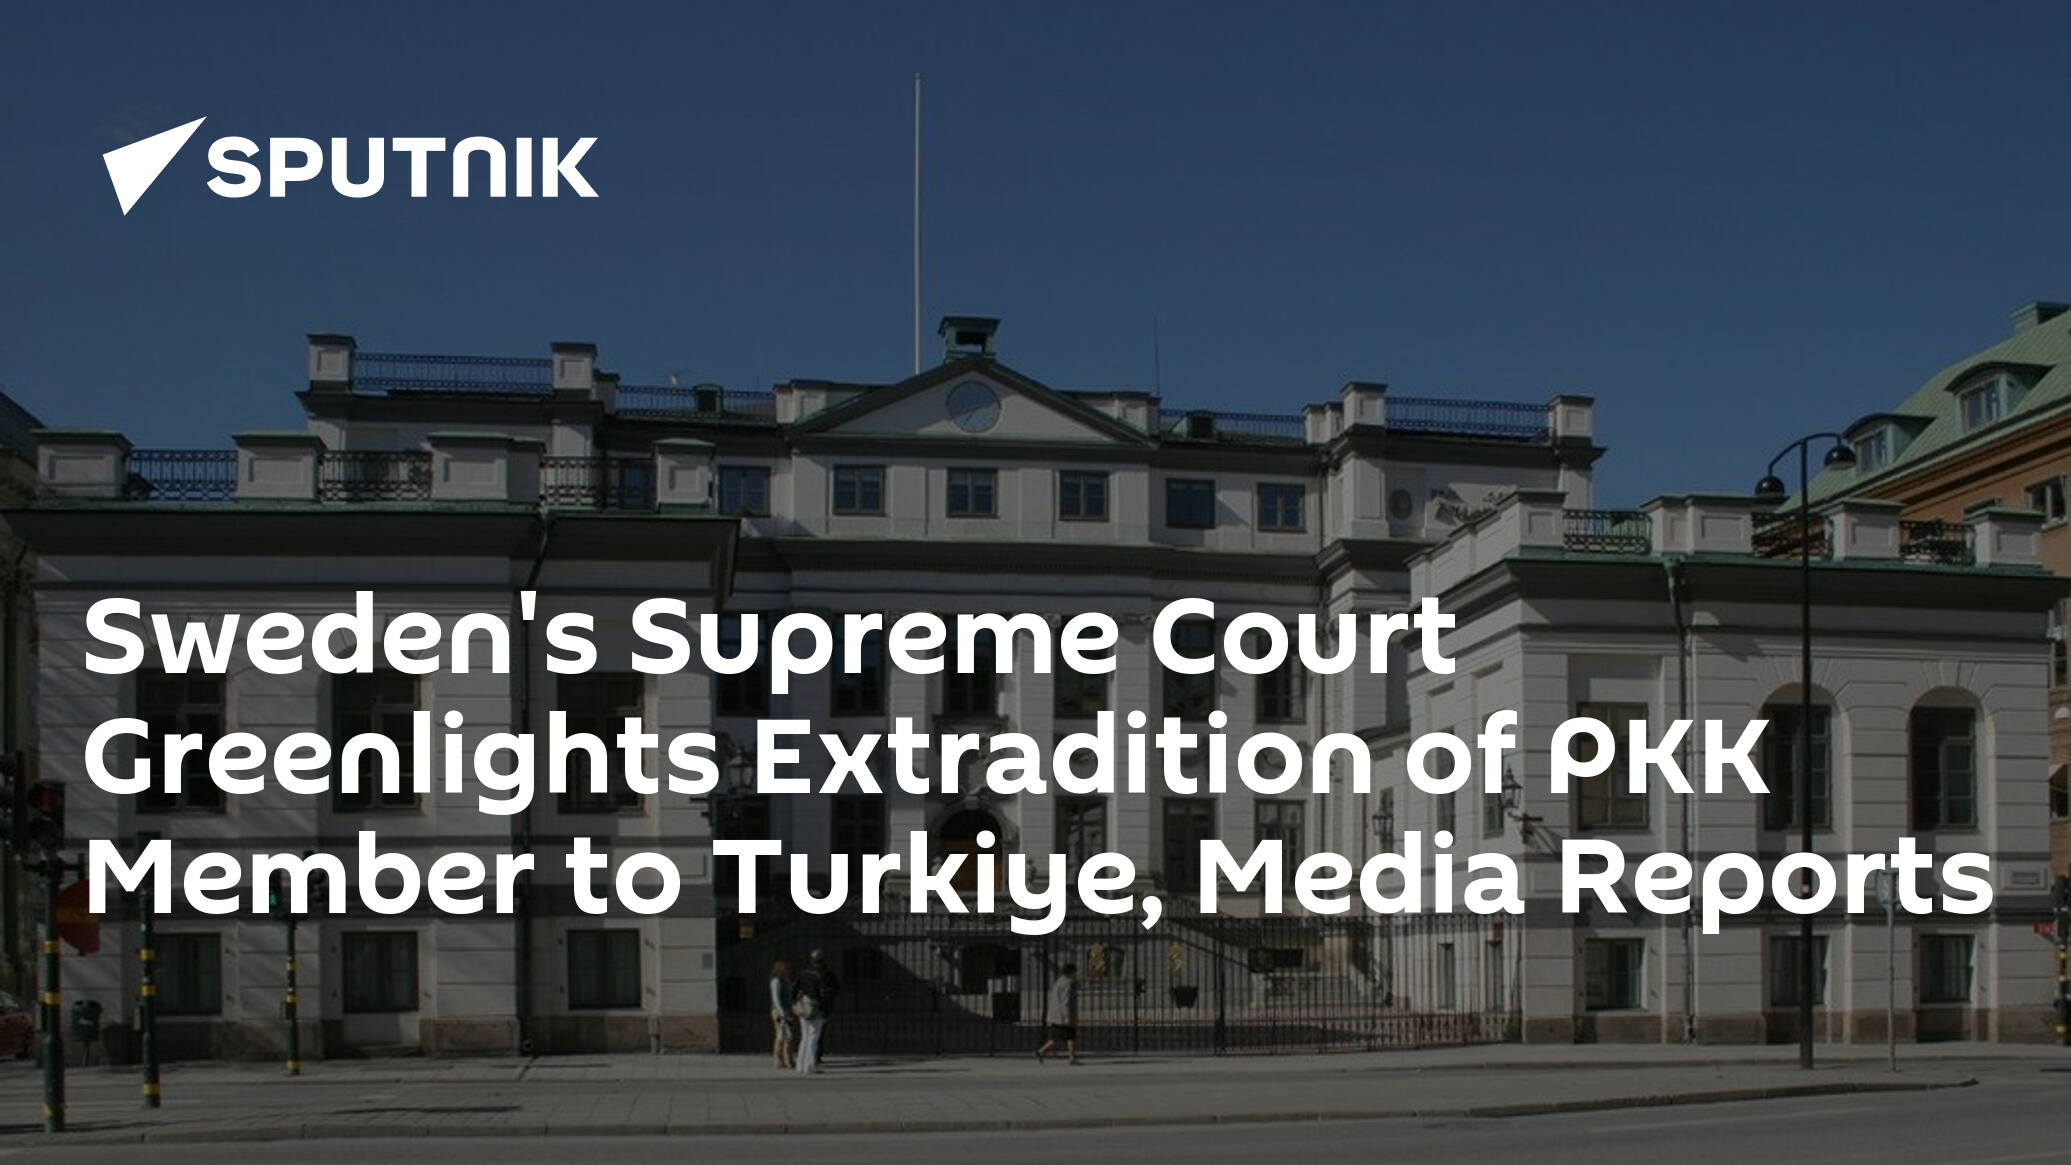 Sweden's Supreme Court Greenlights Extradition of PKK Member to Turkiye, Media Reports